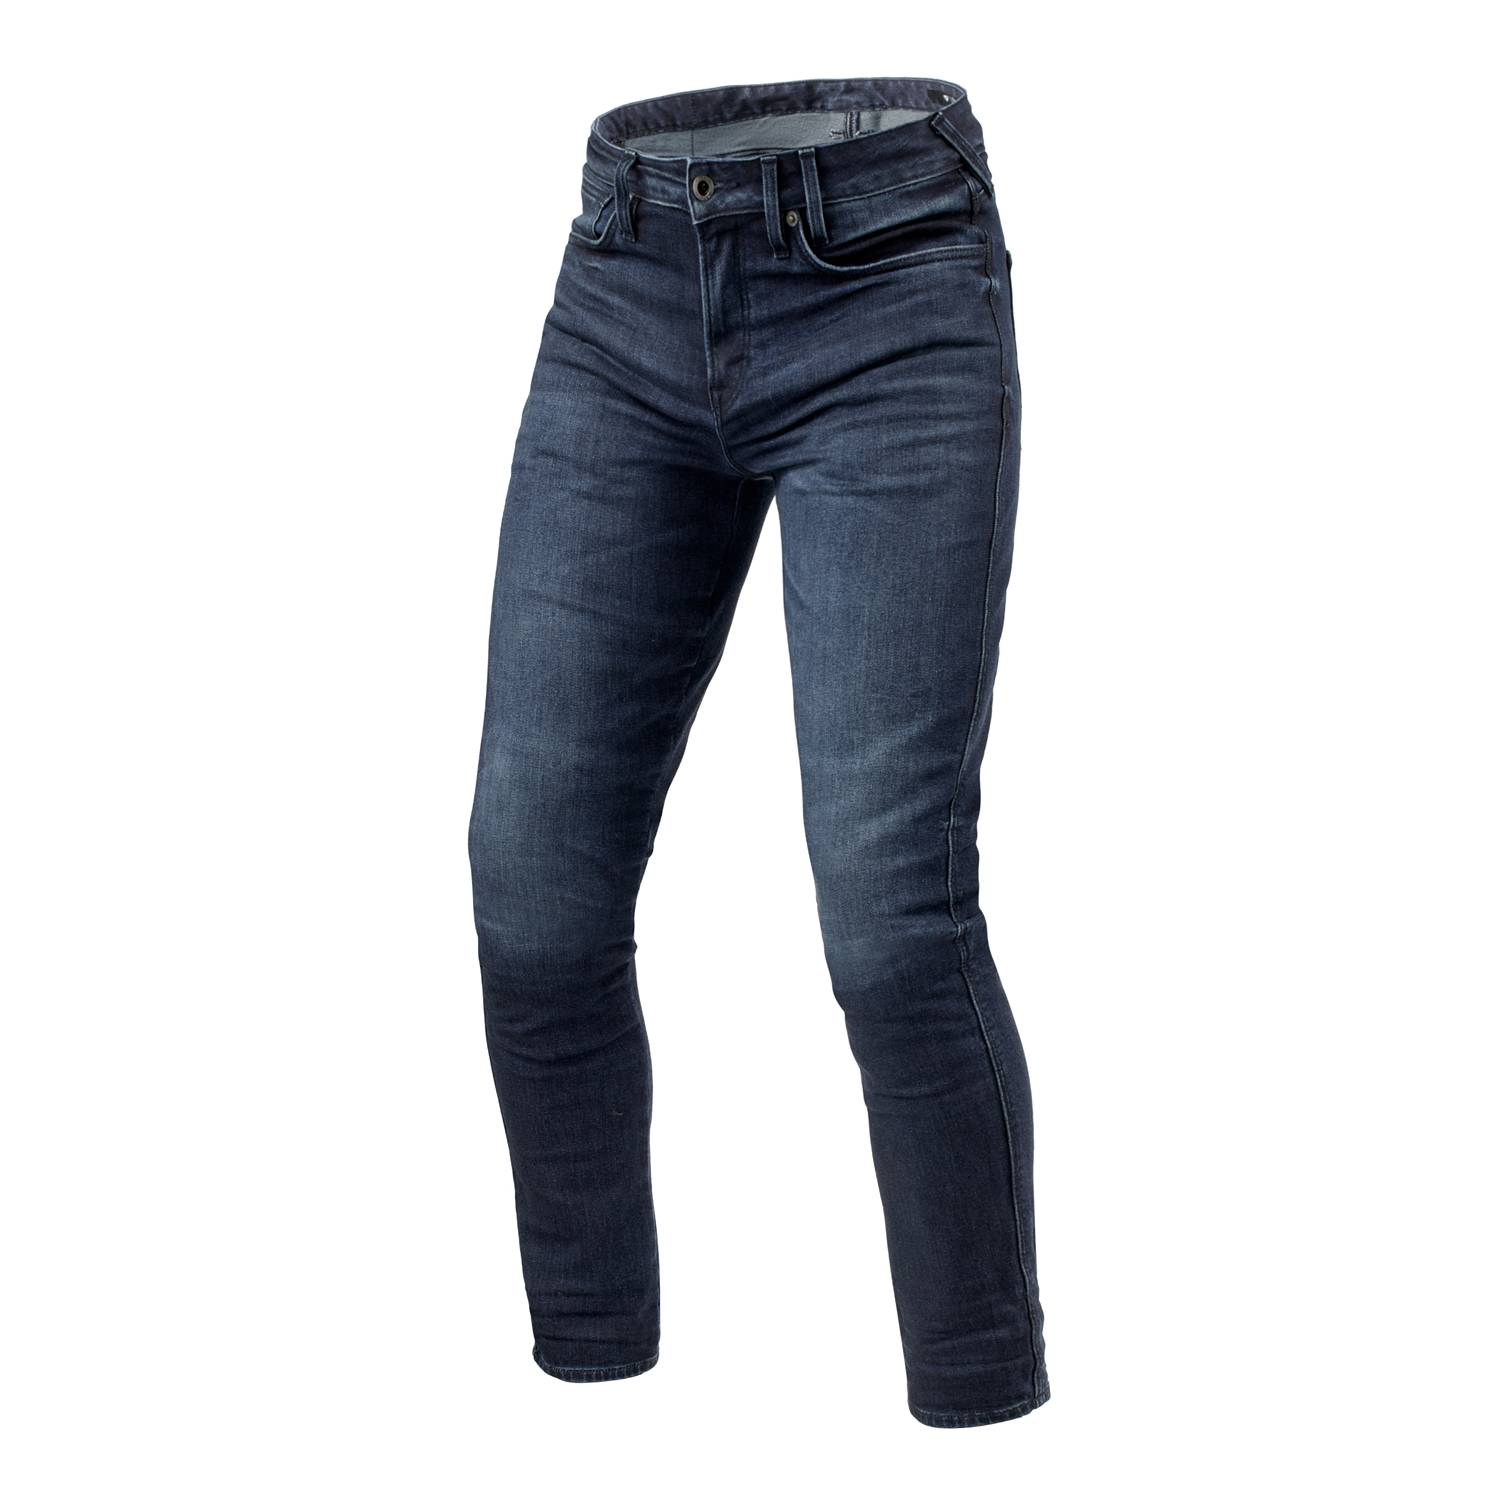 Image of REV'IT! Jeans Carlin SK Dark Blue Used L32 Motorcycle Jeans Talla L32/W36